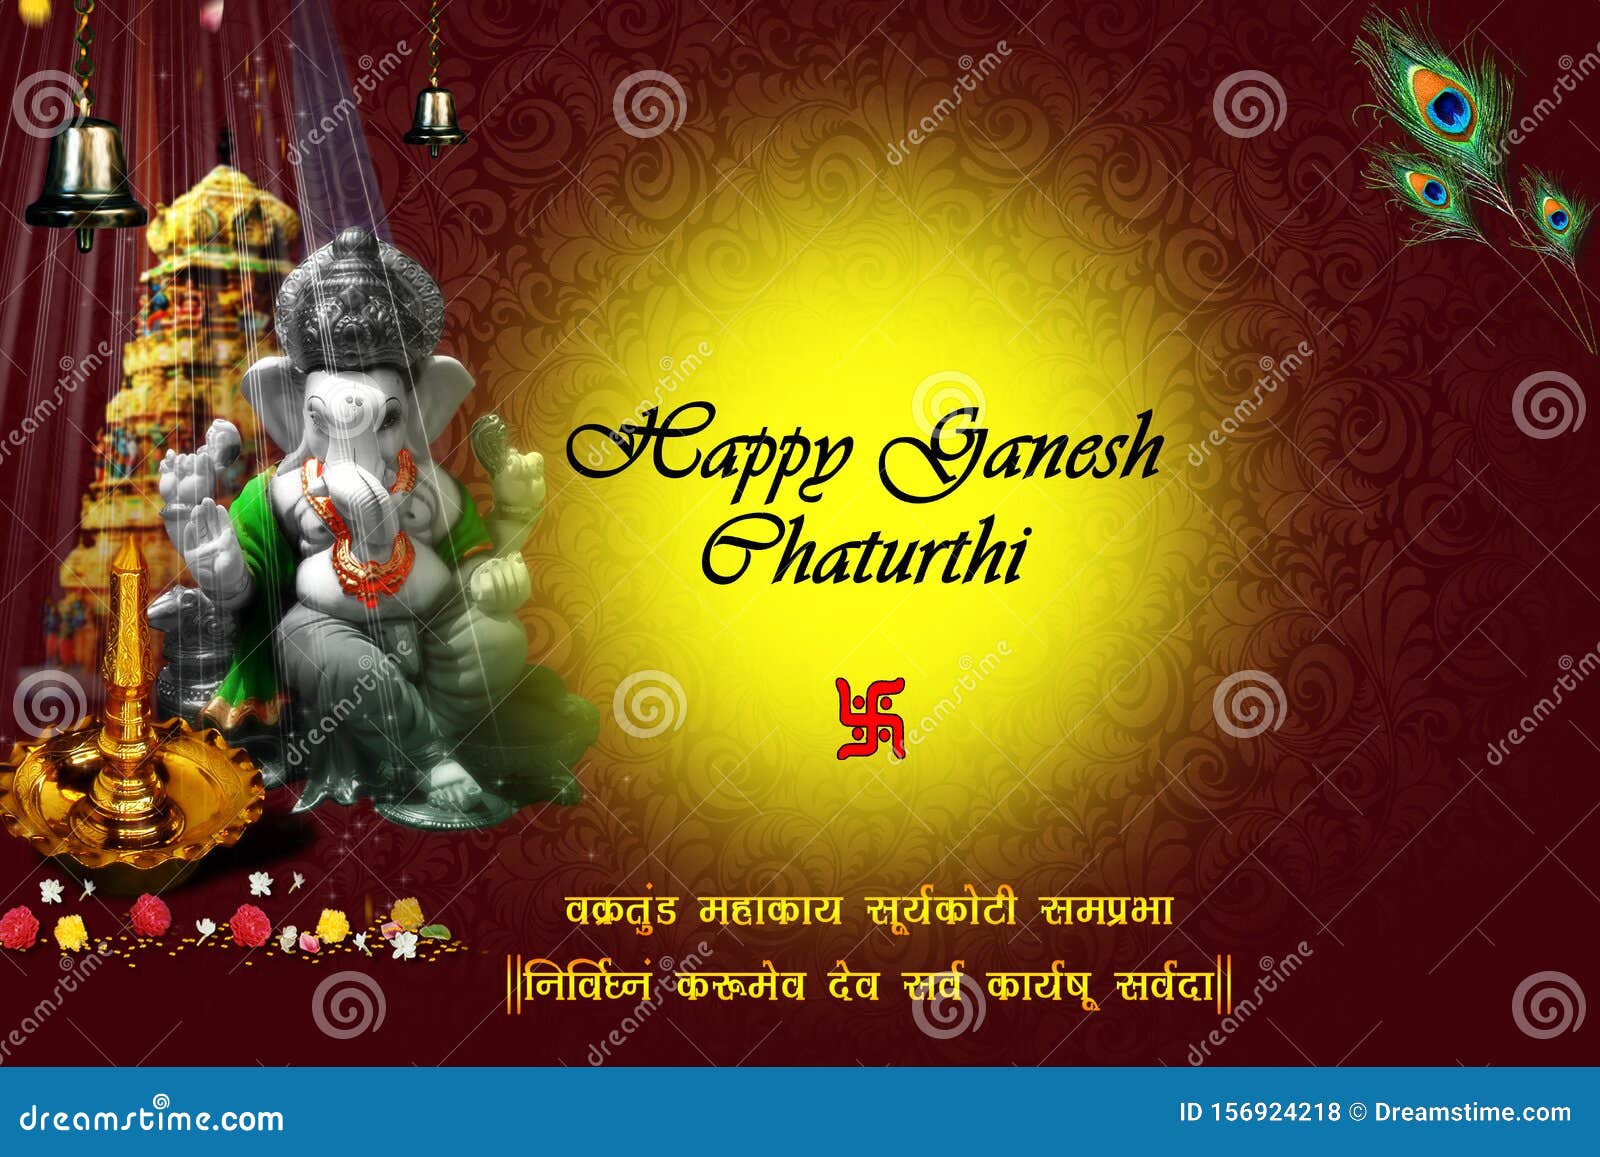 Ganesh chaturthi wallpaper stock photo. Image of celebrating ...